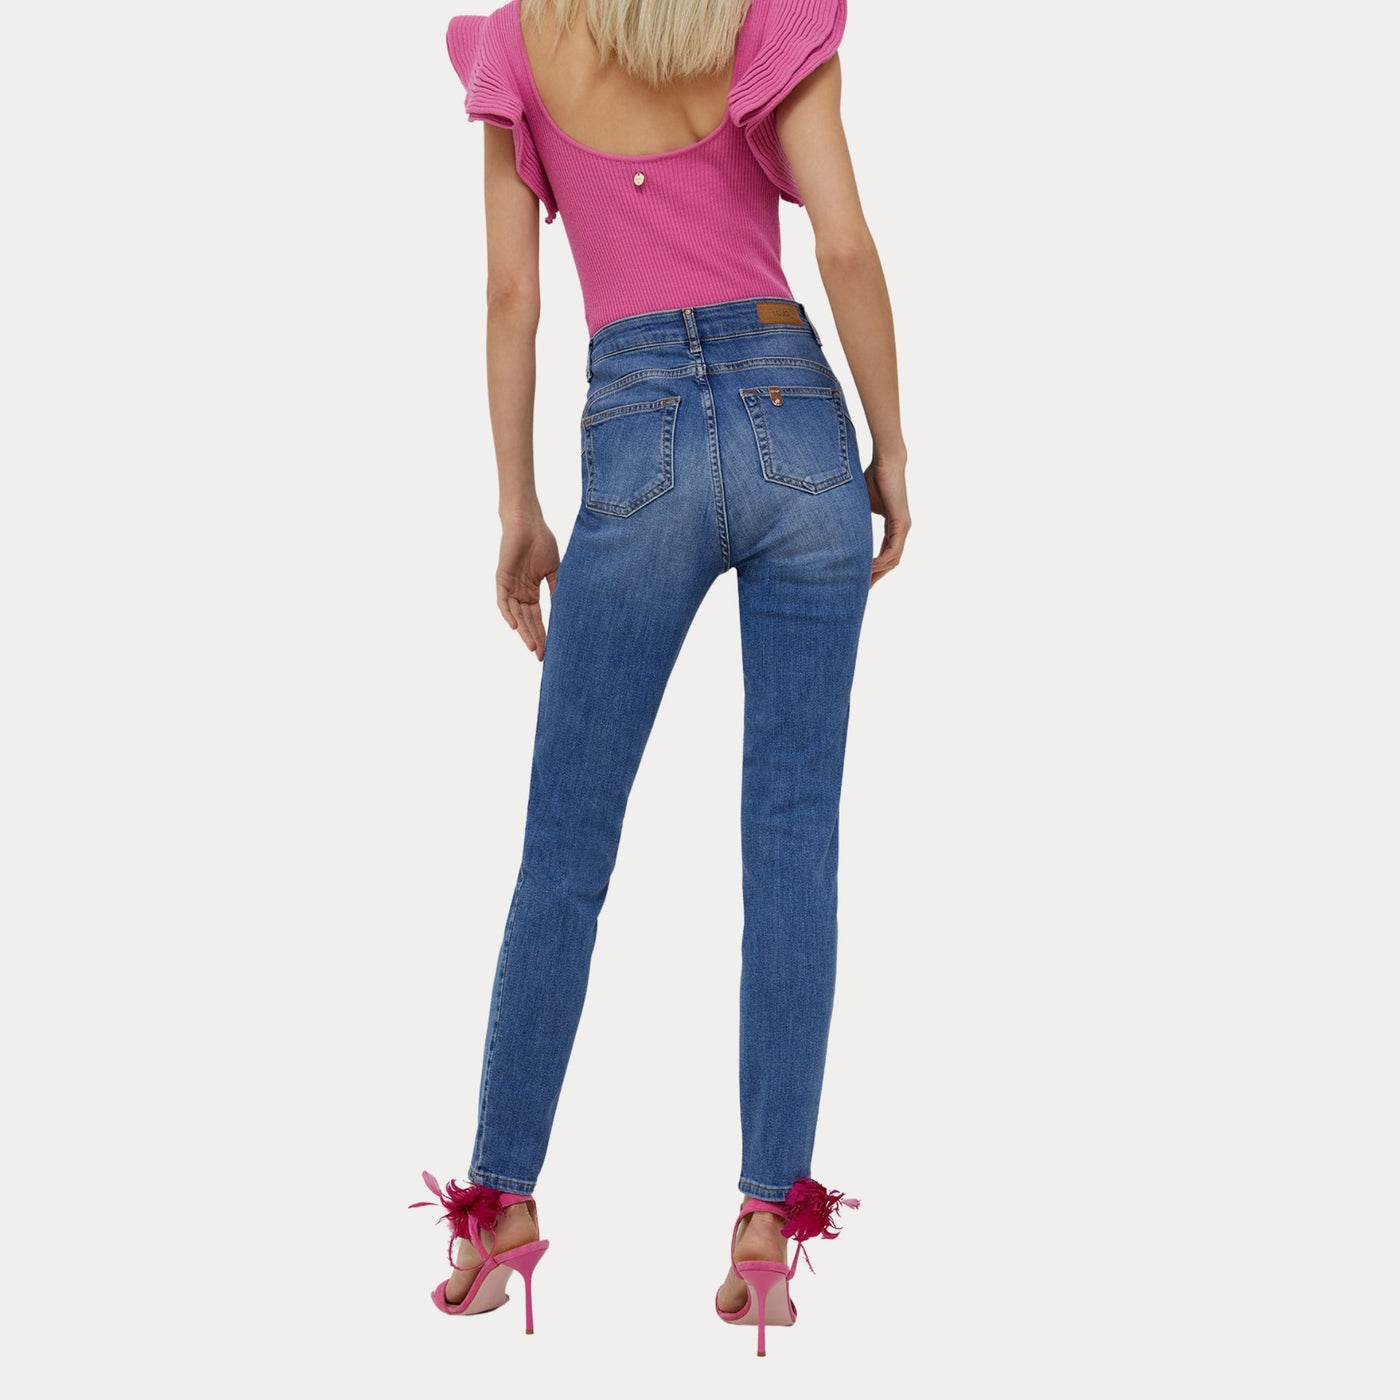 Jeans donna skinny in denim stretch di Liu Jo. Indossati dalla modella vista posteriore